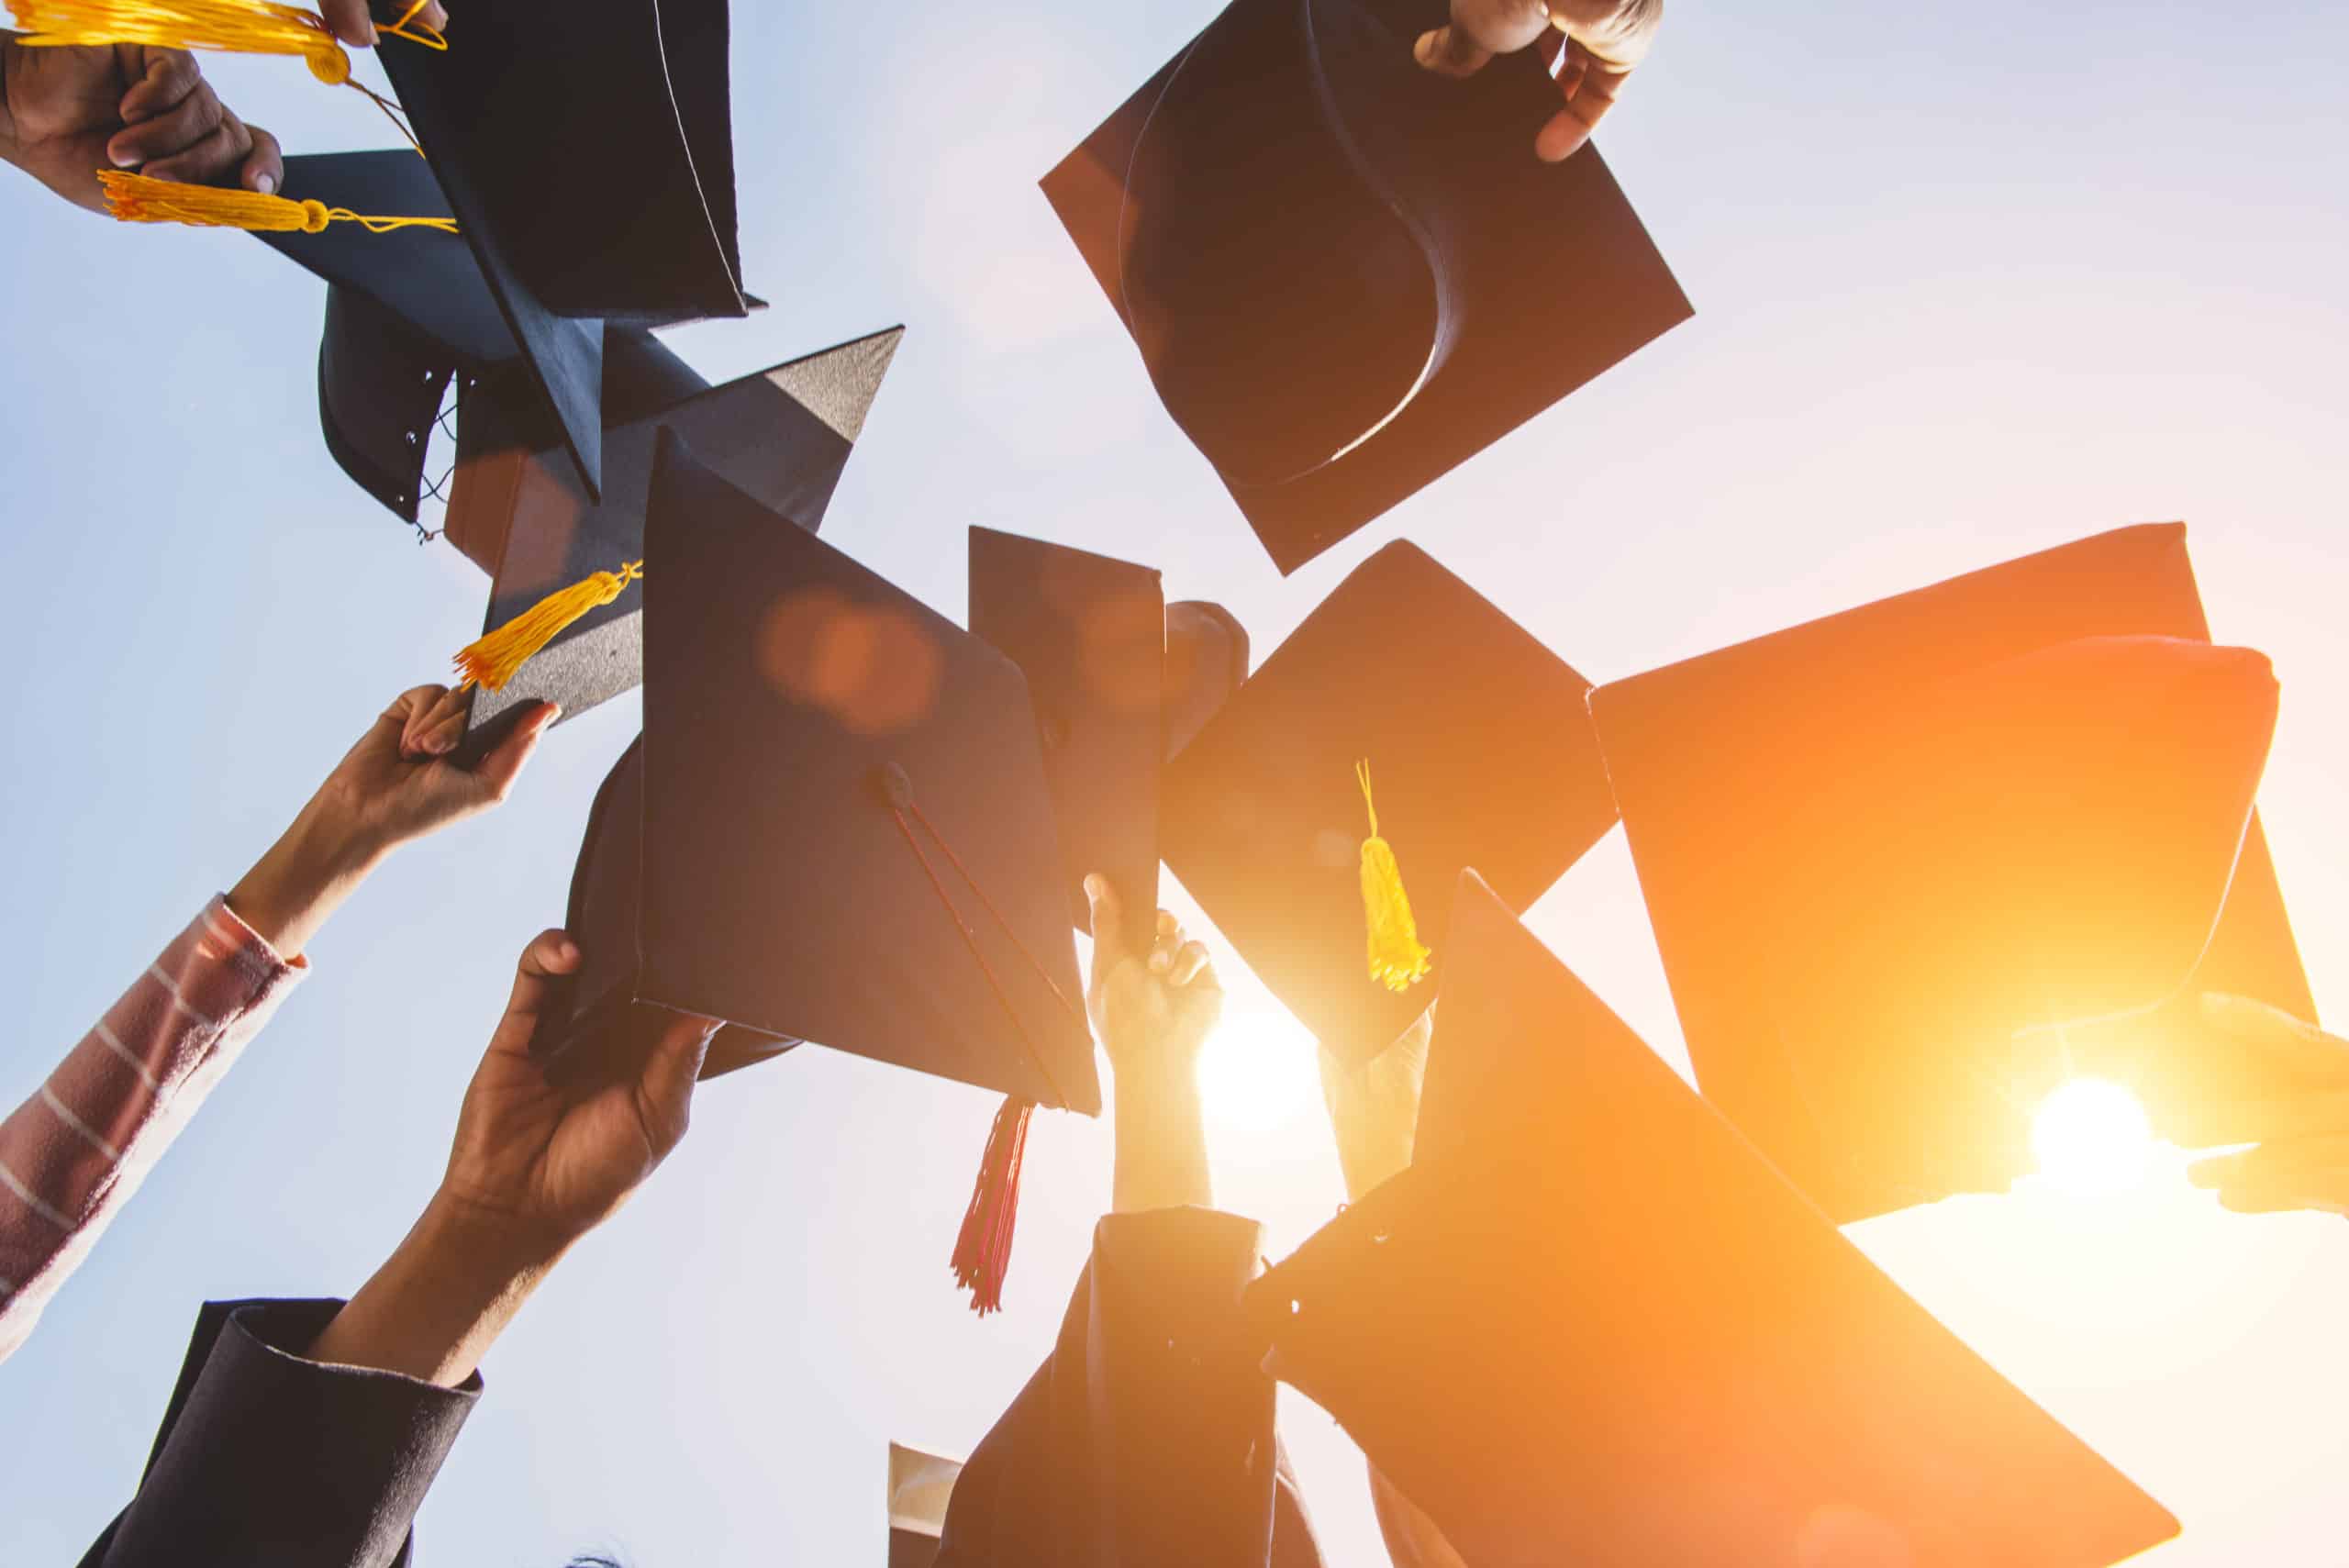 graduates-throw-hat-diploma-ceremony-university-scaled